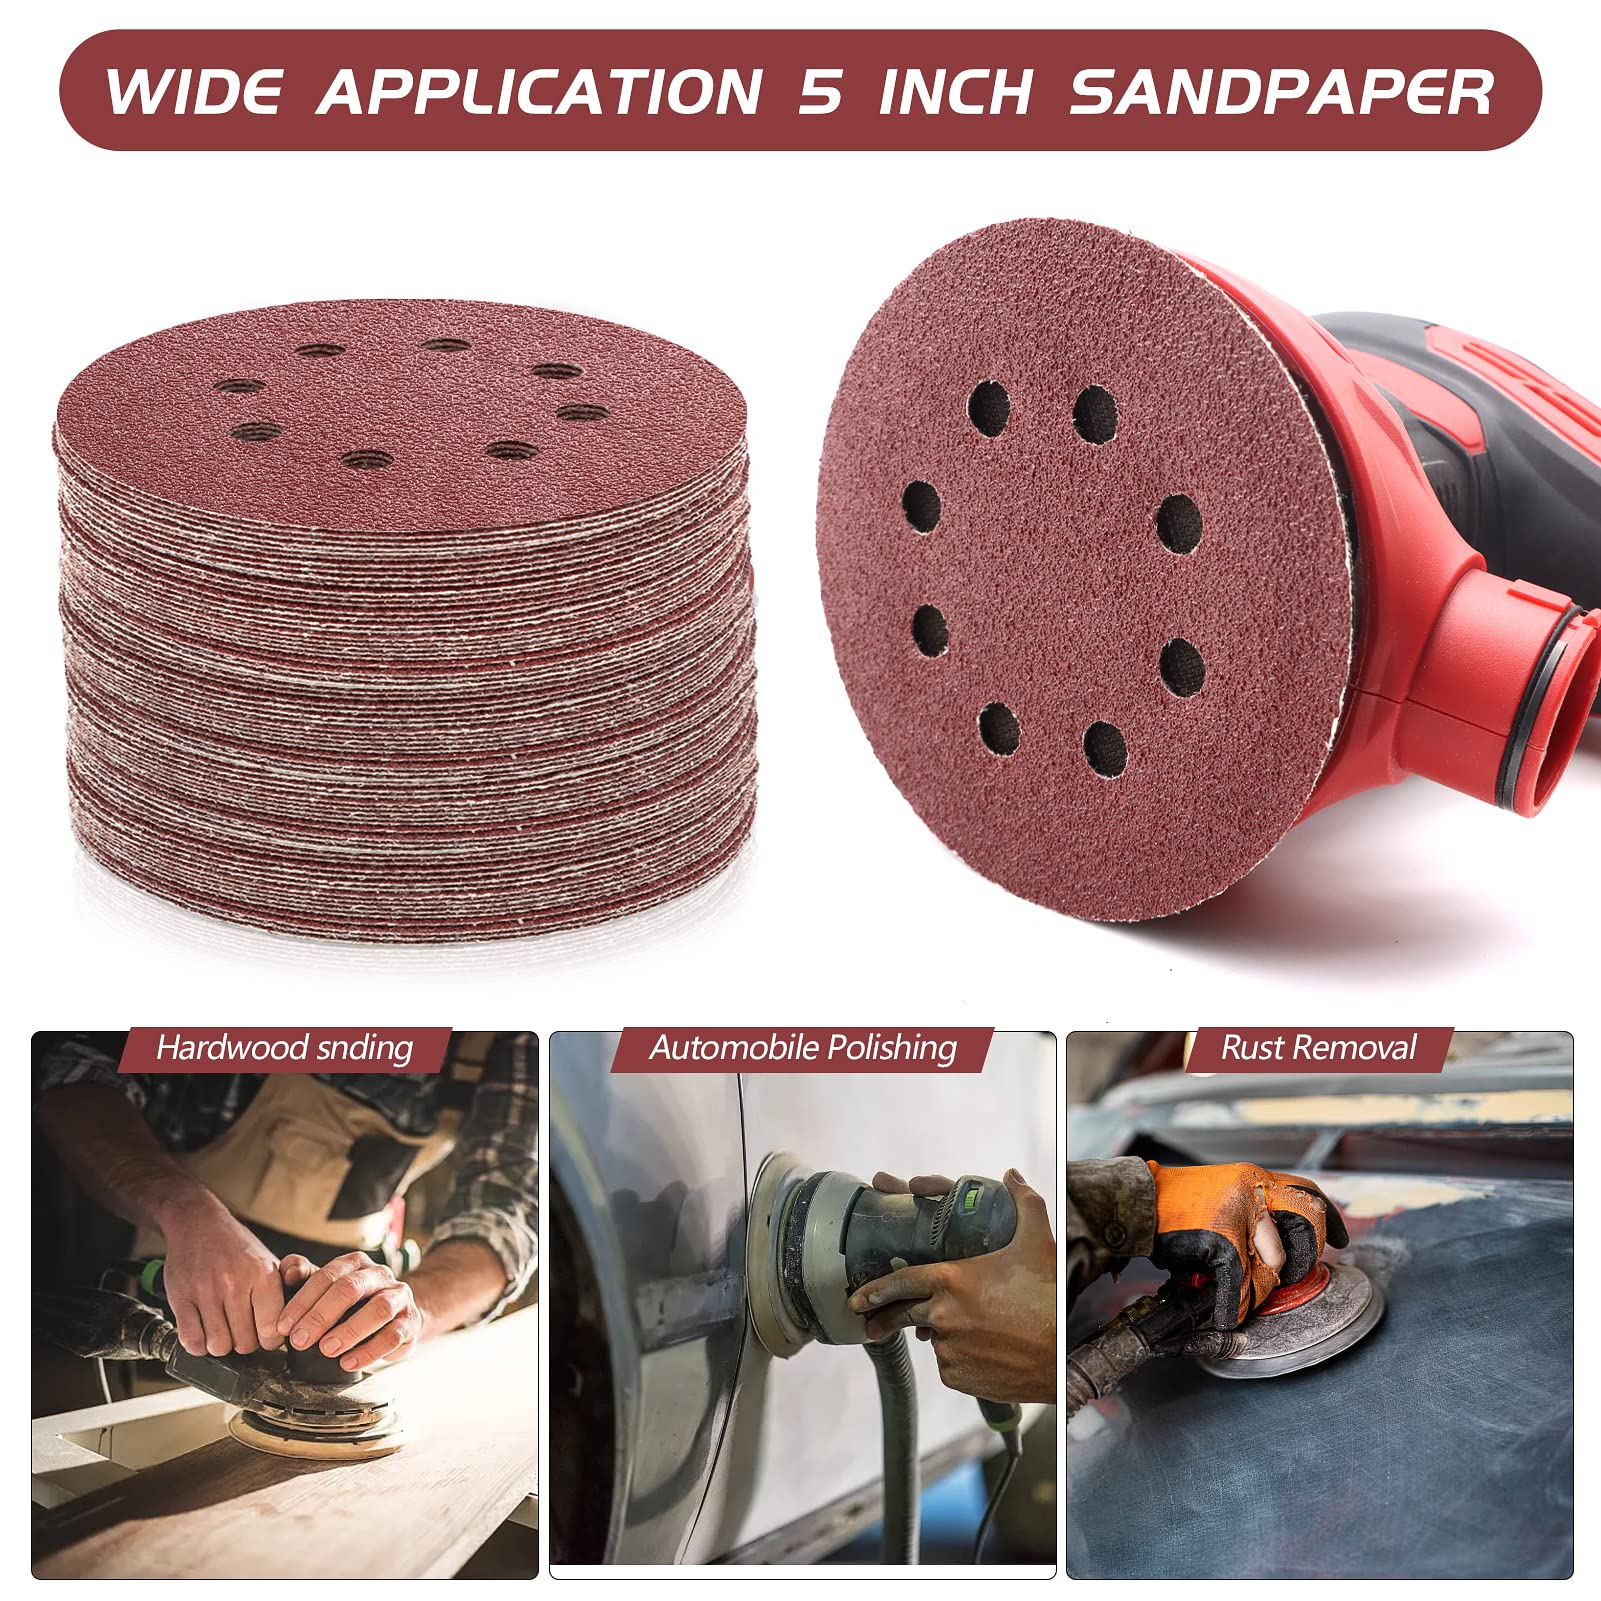 ZEHIQ 110pcs 5 Inch Sanding Disc 40 Grit, 8 Hole Hook and Loop Sandpaper Round Sanding Pads Random Orbital Sander Paper for Automotive and Wood Working